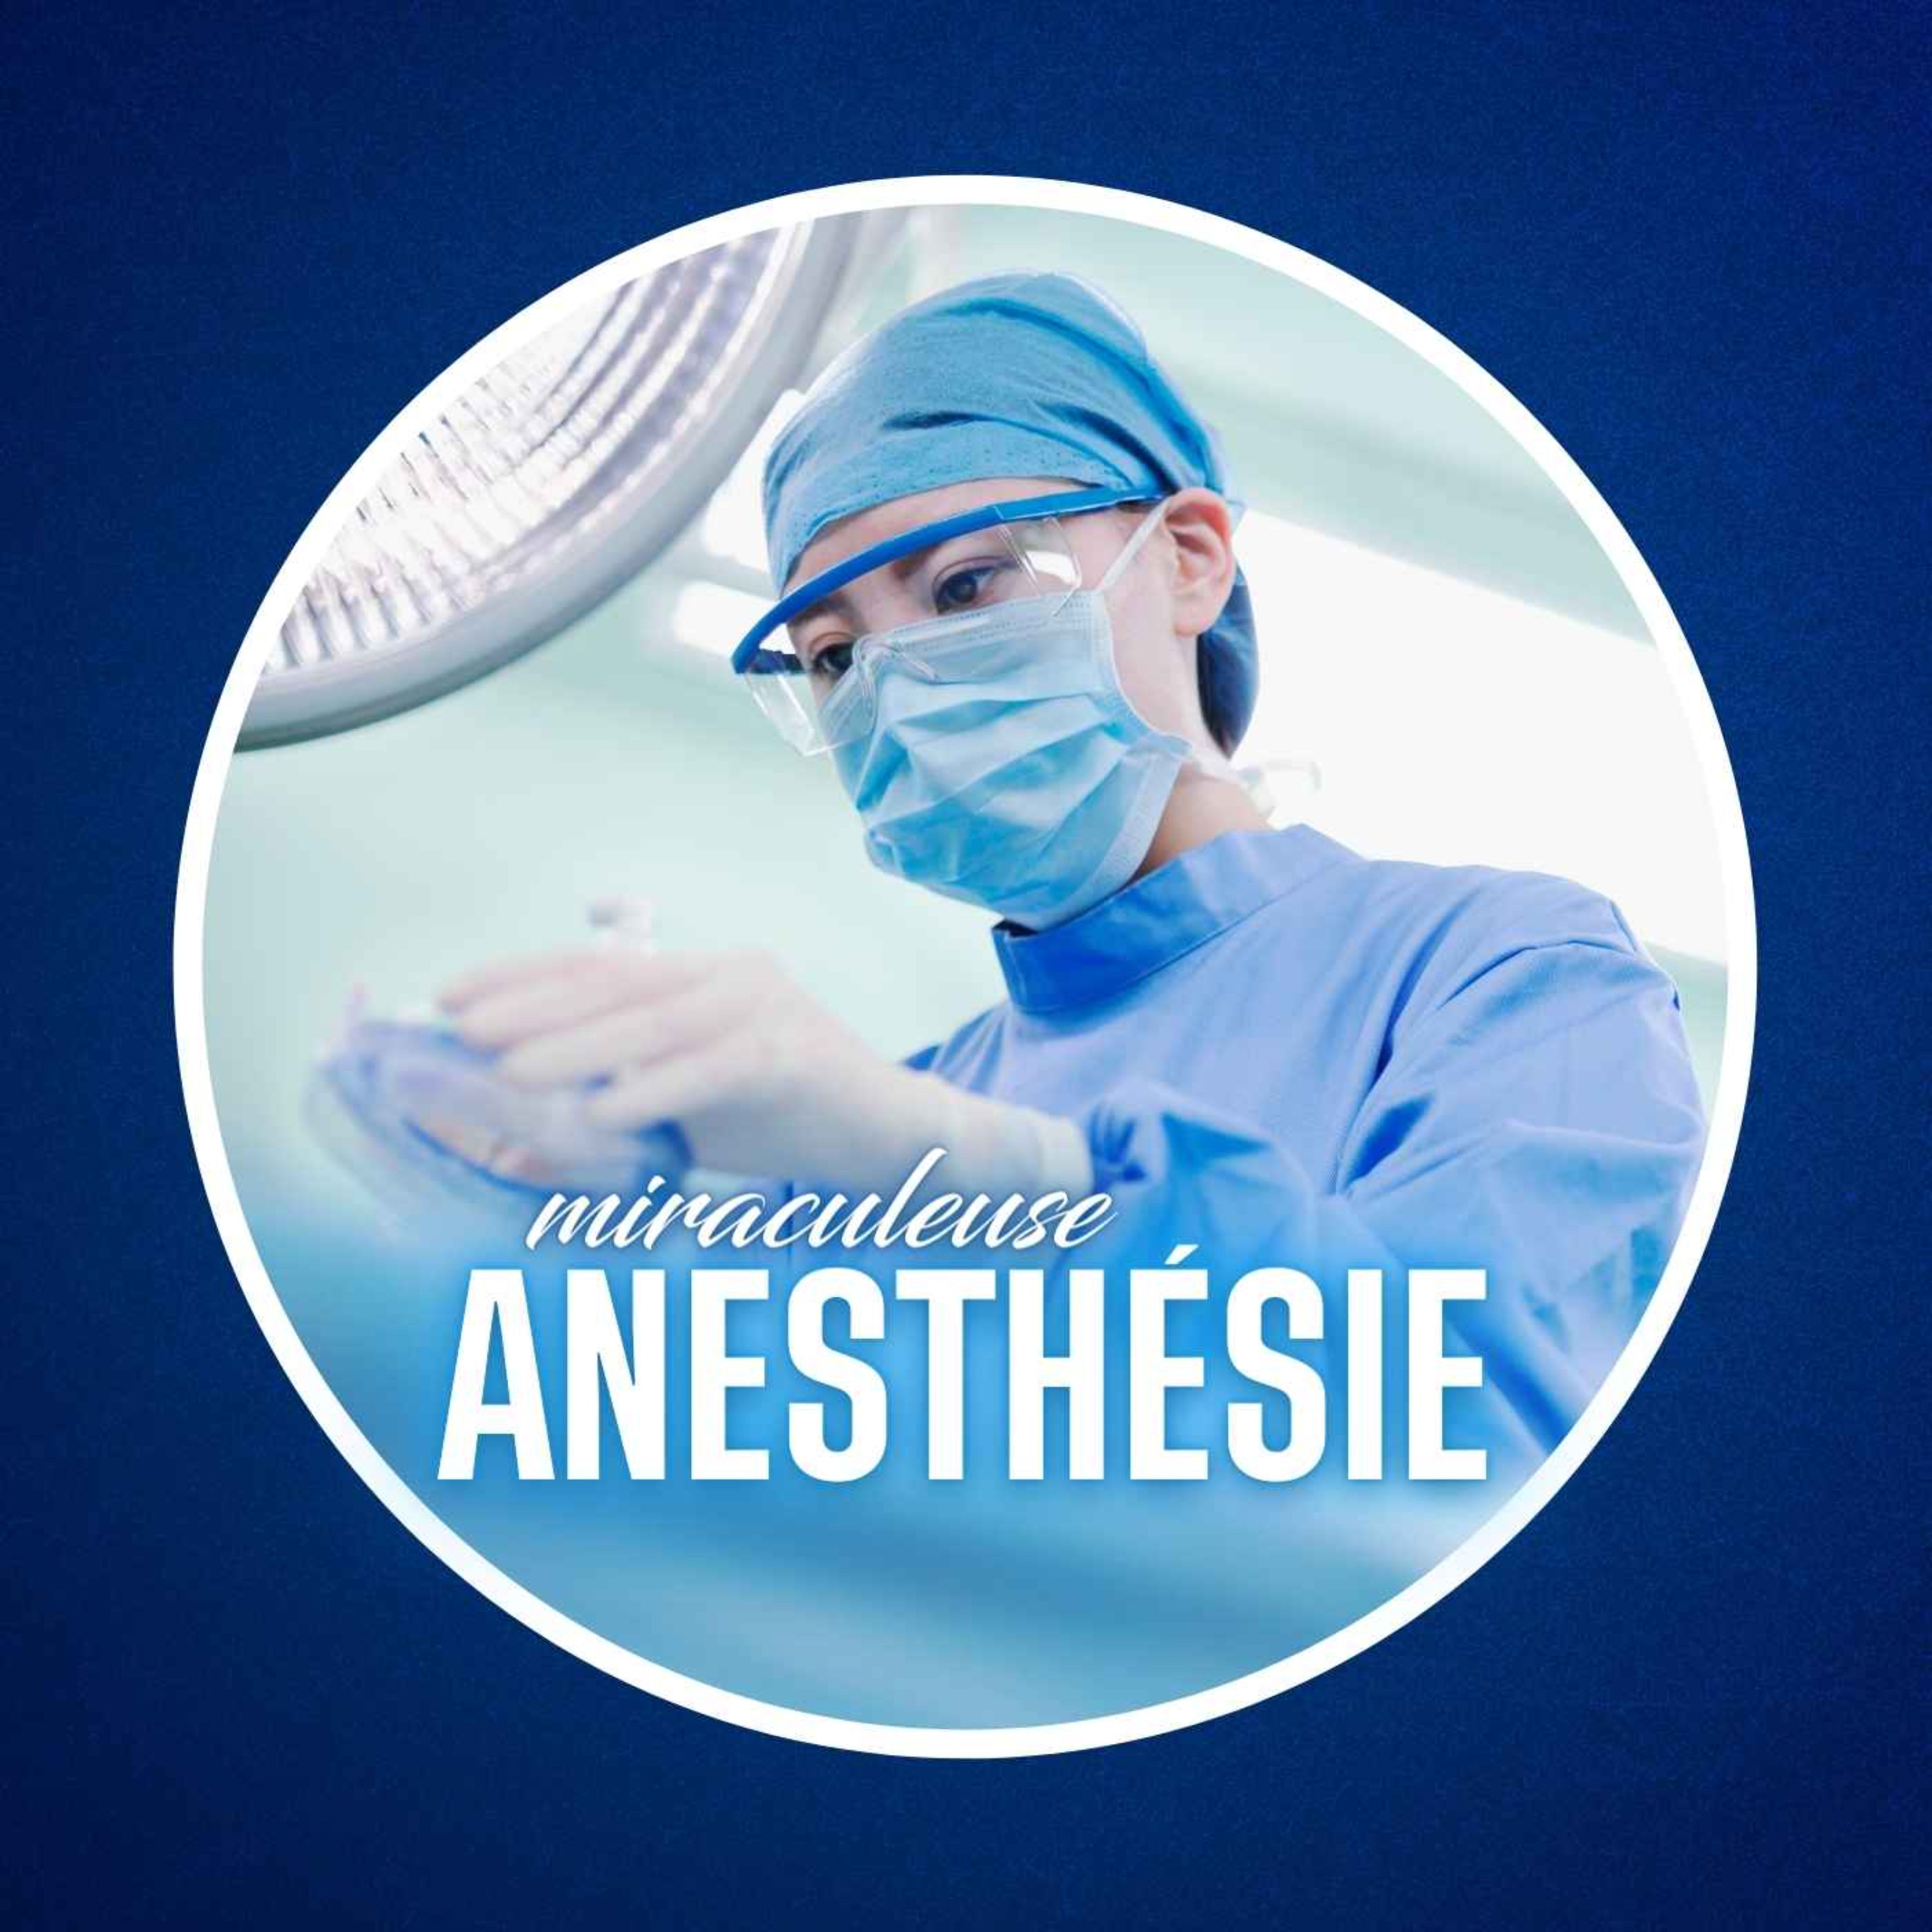 Comment fonctionne une anesthésie ?